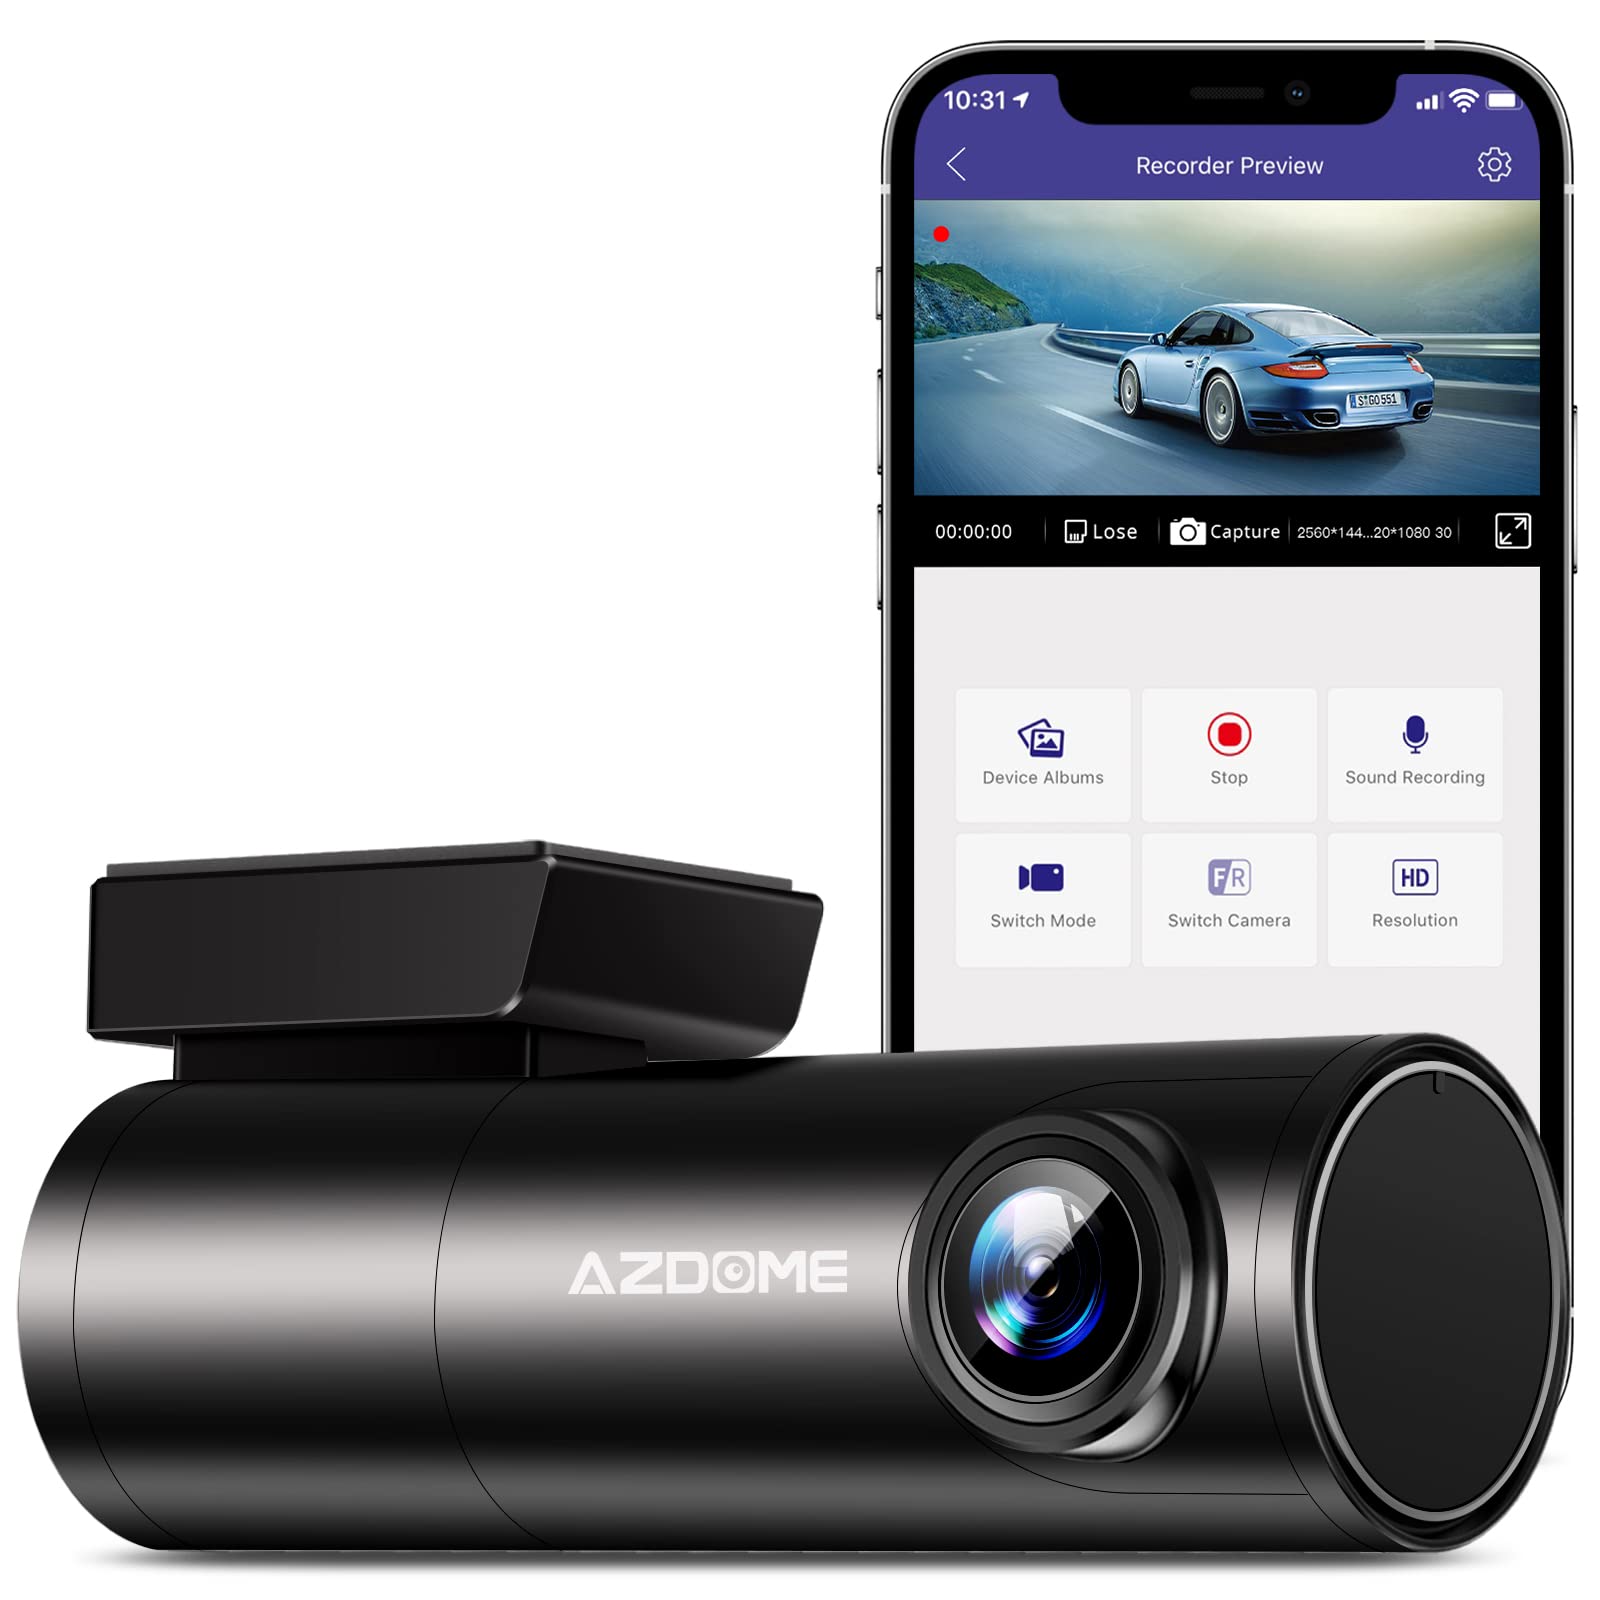 AZDOME M300 Dash Cam 1080P Car DVR WiFi English Voice Command APP Control Front Hidden Car Video Camera Recorder